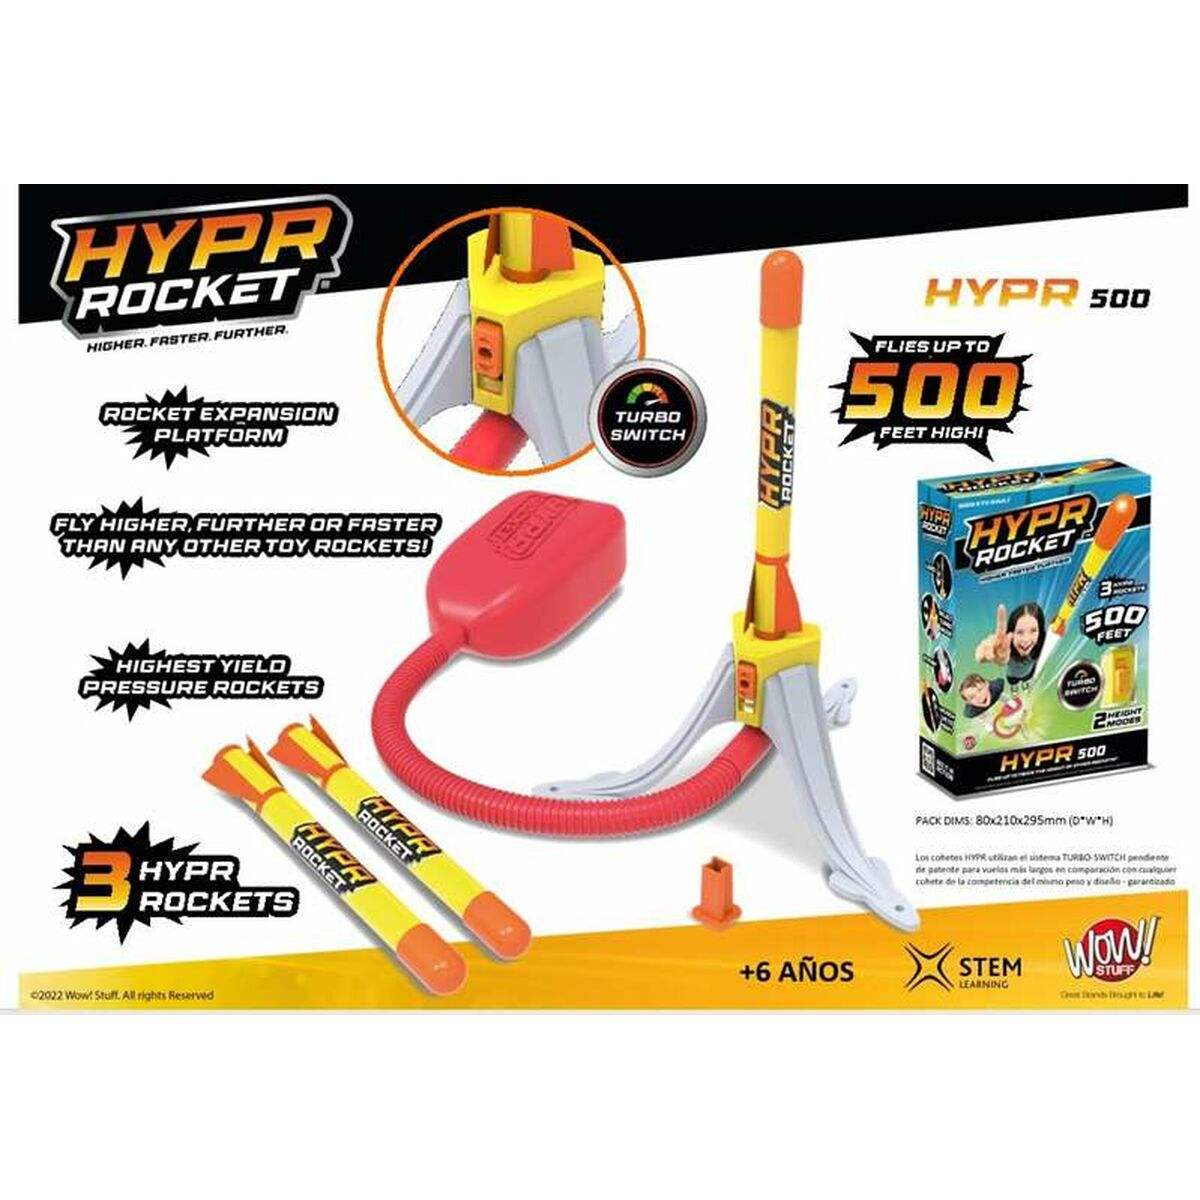 Lanceur Bandai Hypr Rocket Jump 500 - Bandai - Jardin D'Eyden - jardindeyden.fr